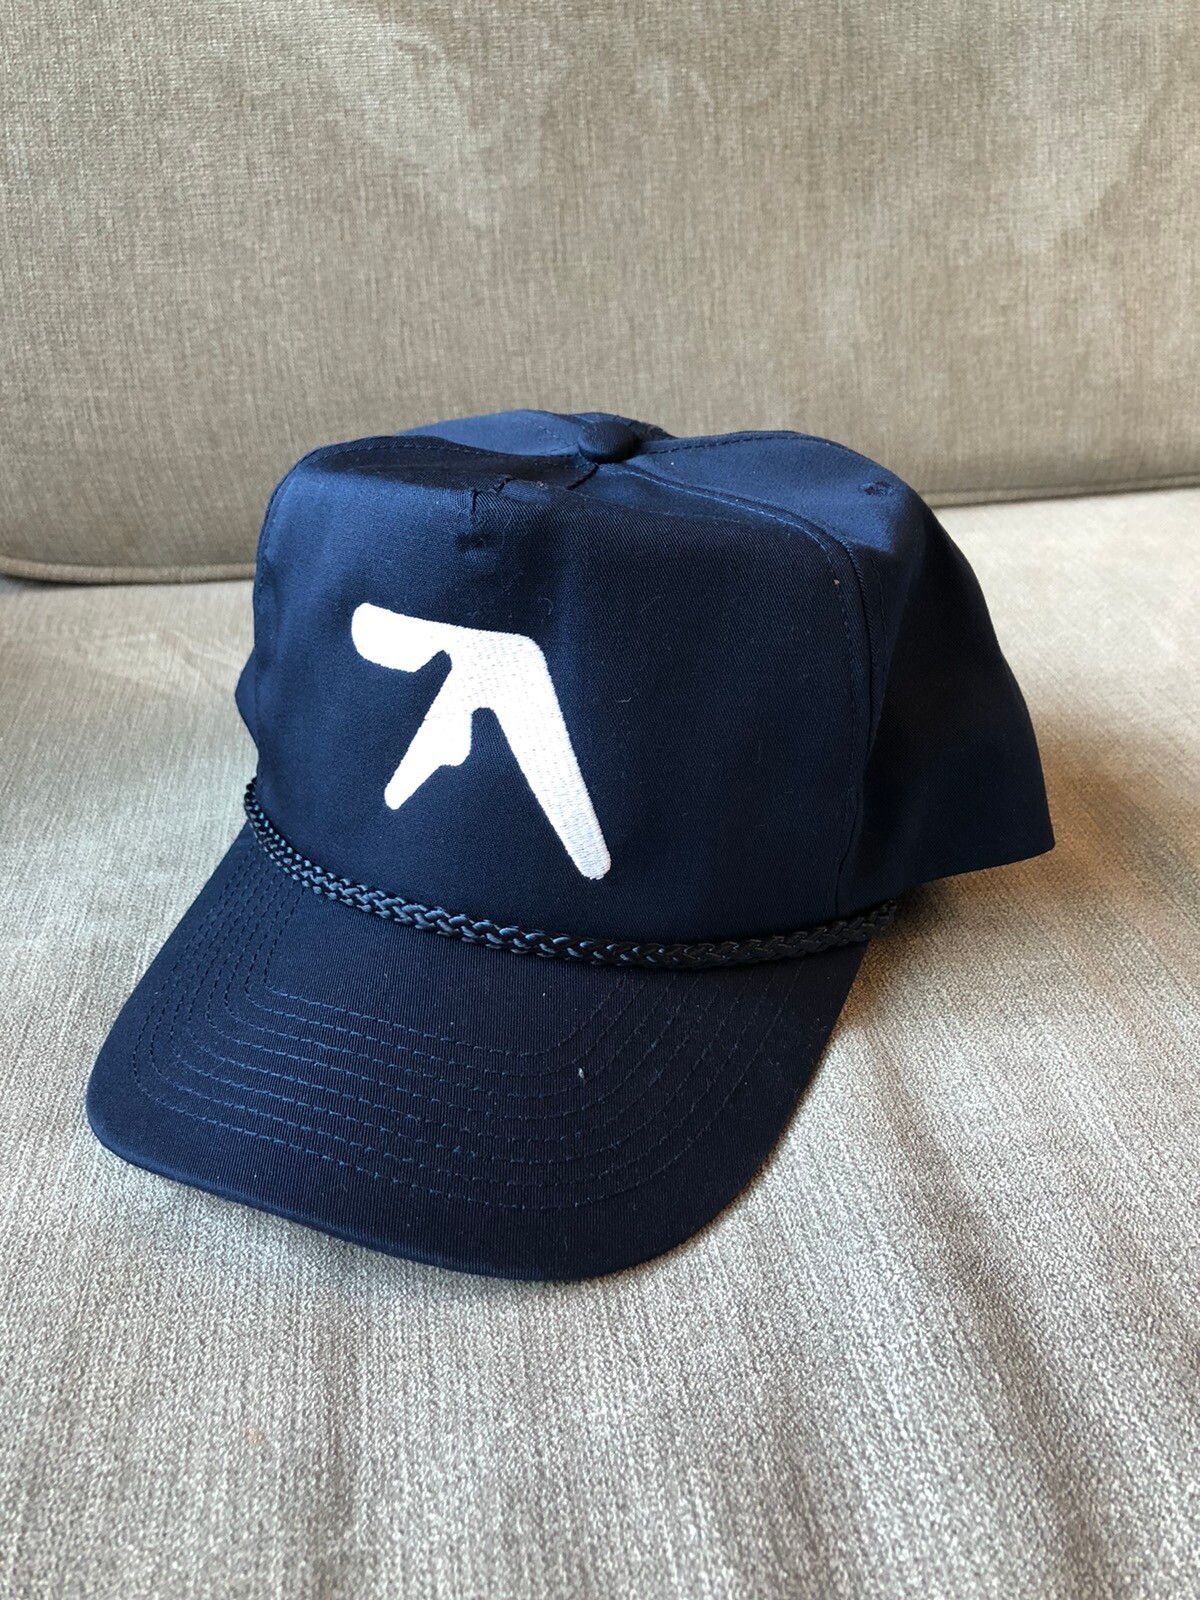 Aphex Twin cap hat petrified good